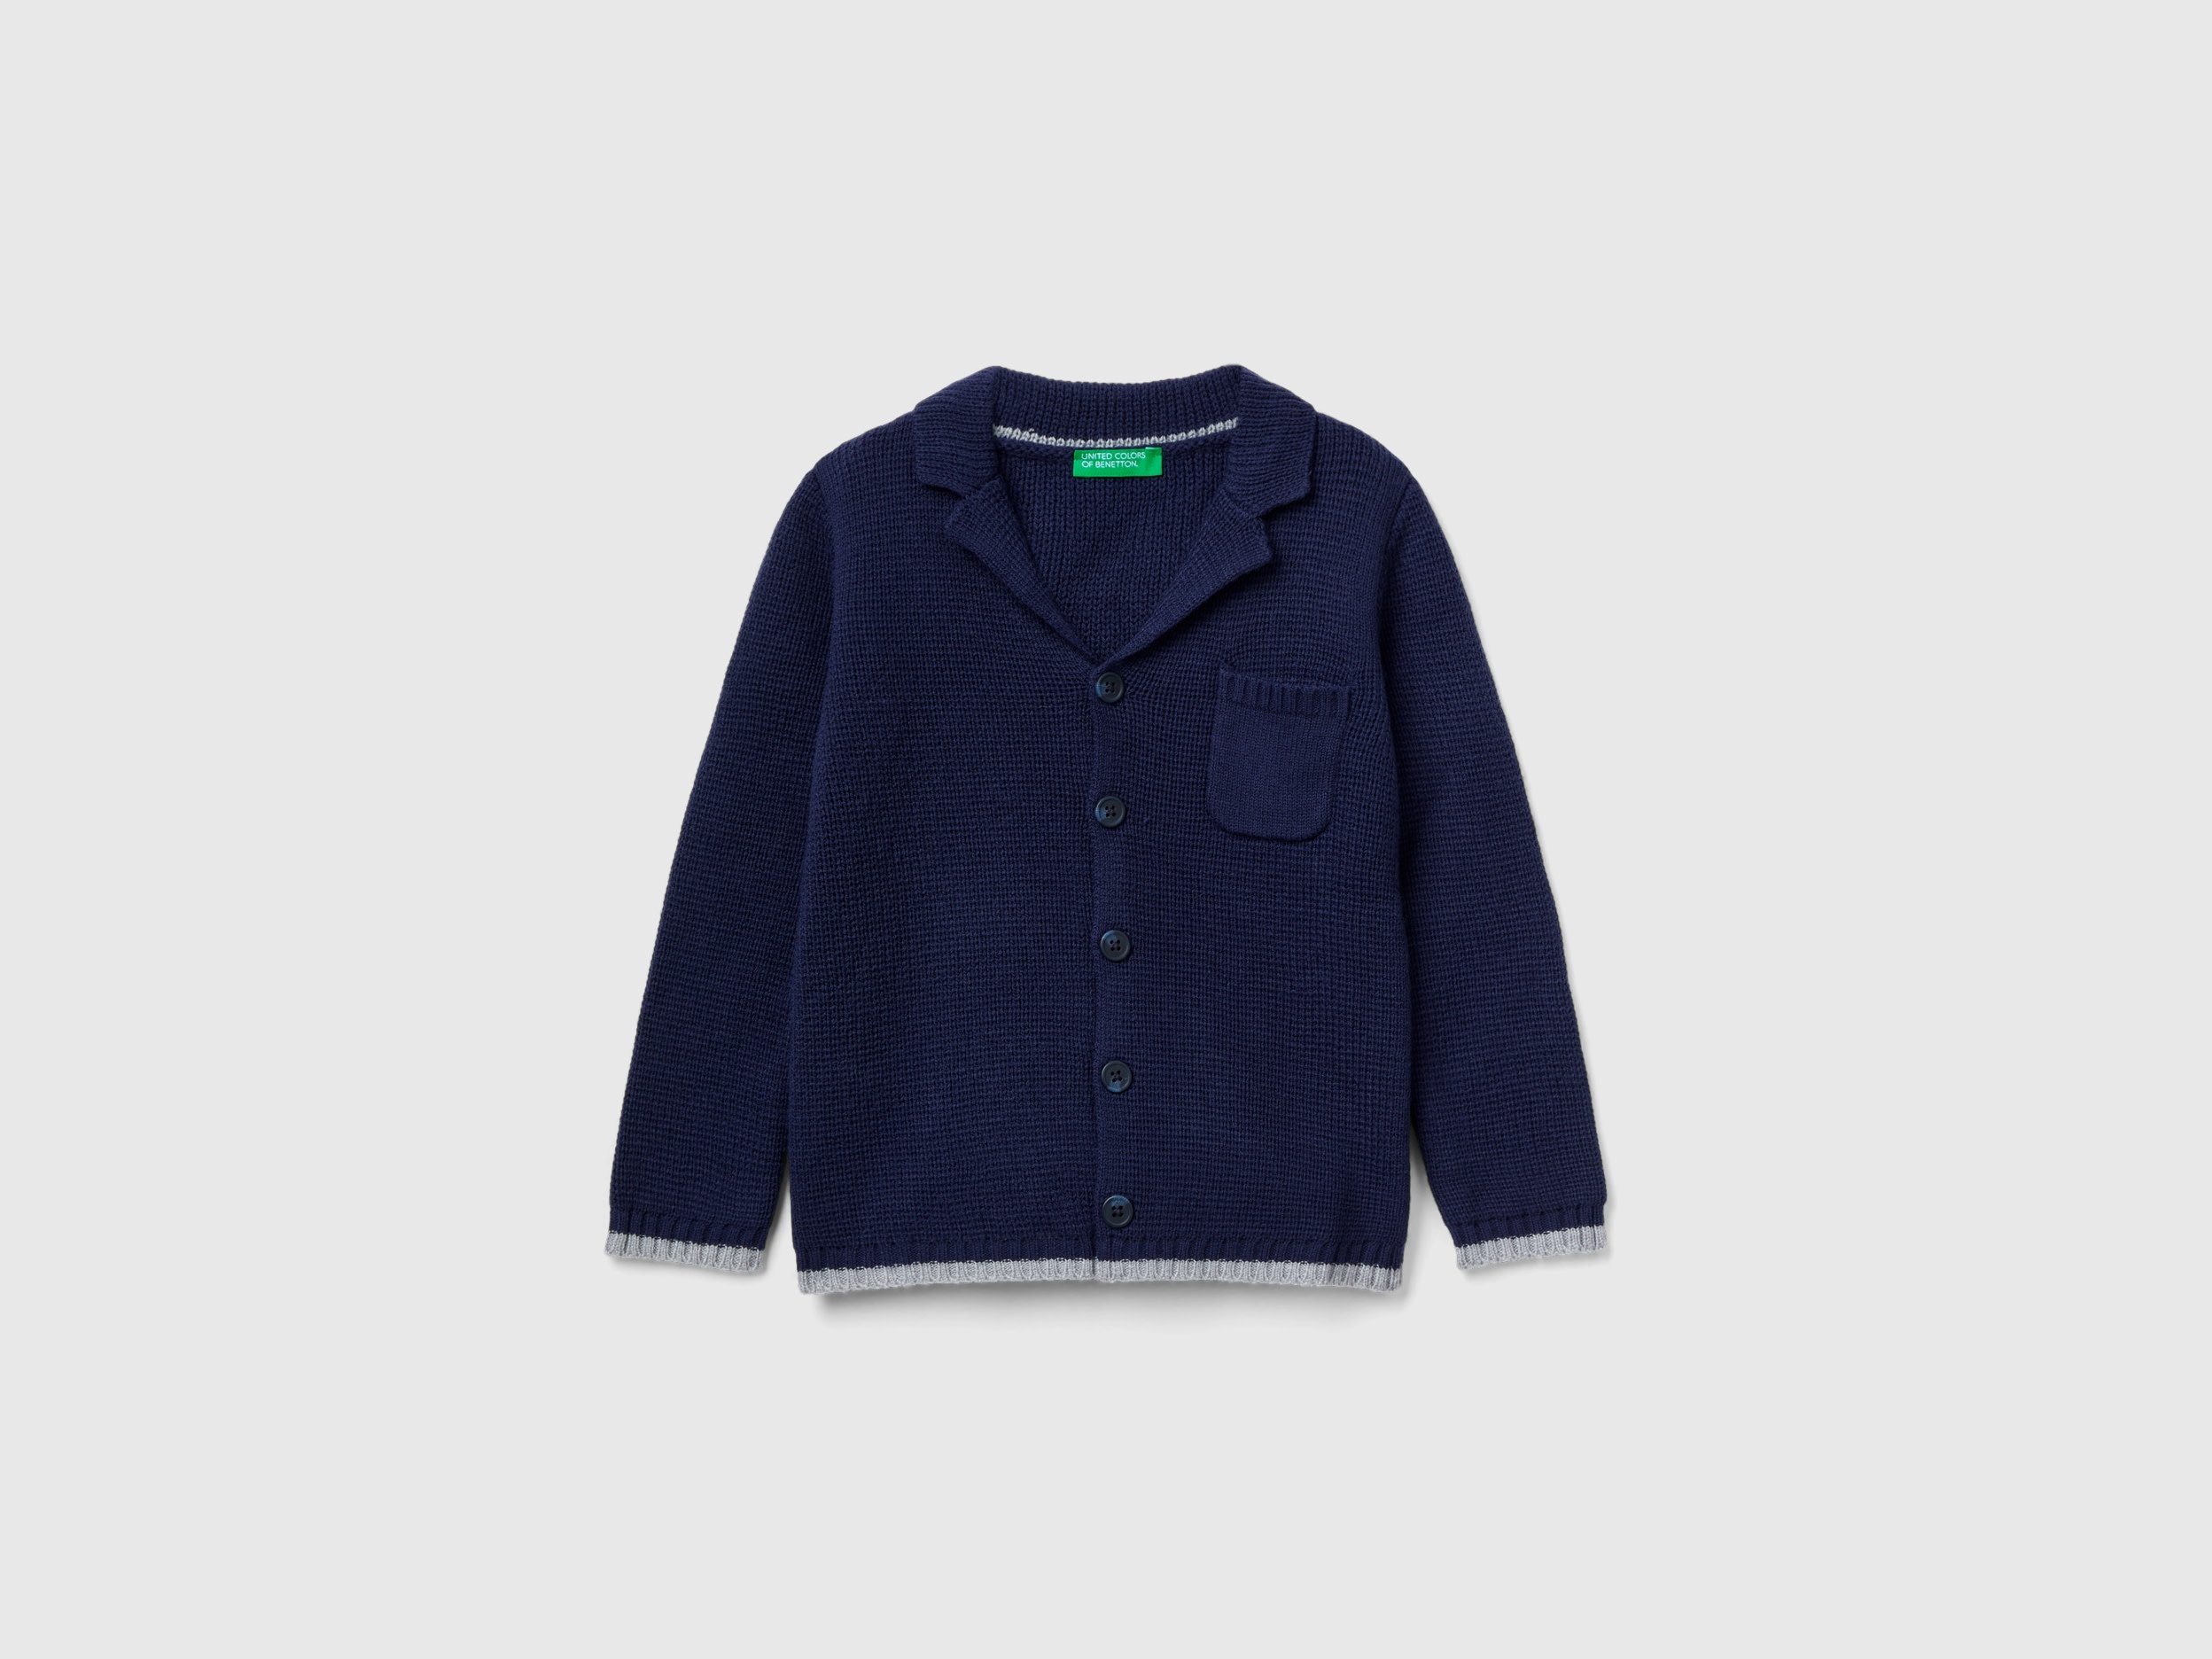 Benetton, Knit Blazer With Pocket, size 5-6, Dark Blue, Kids